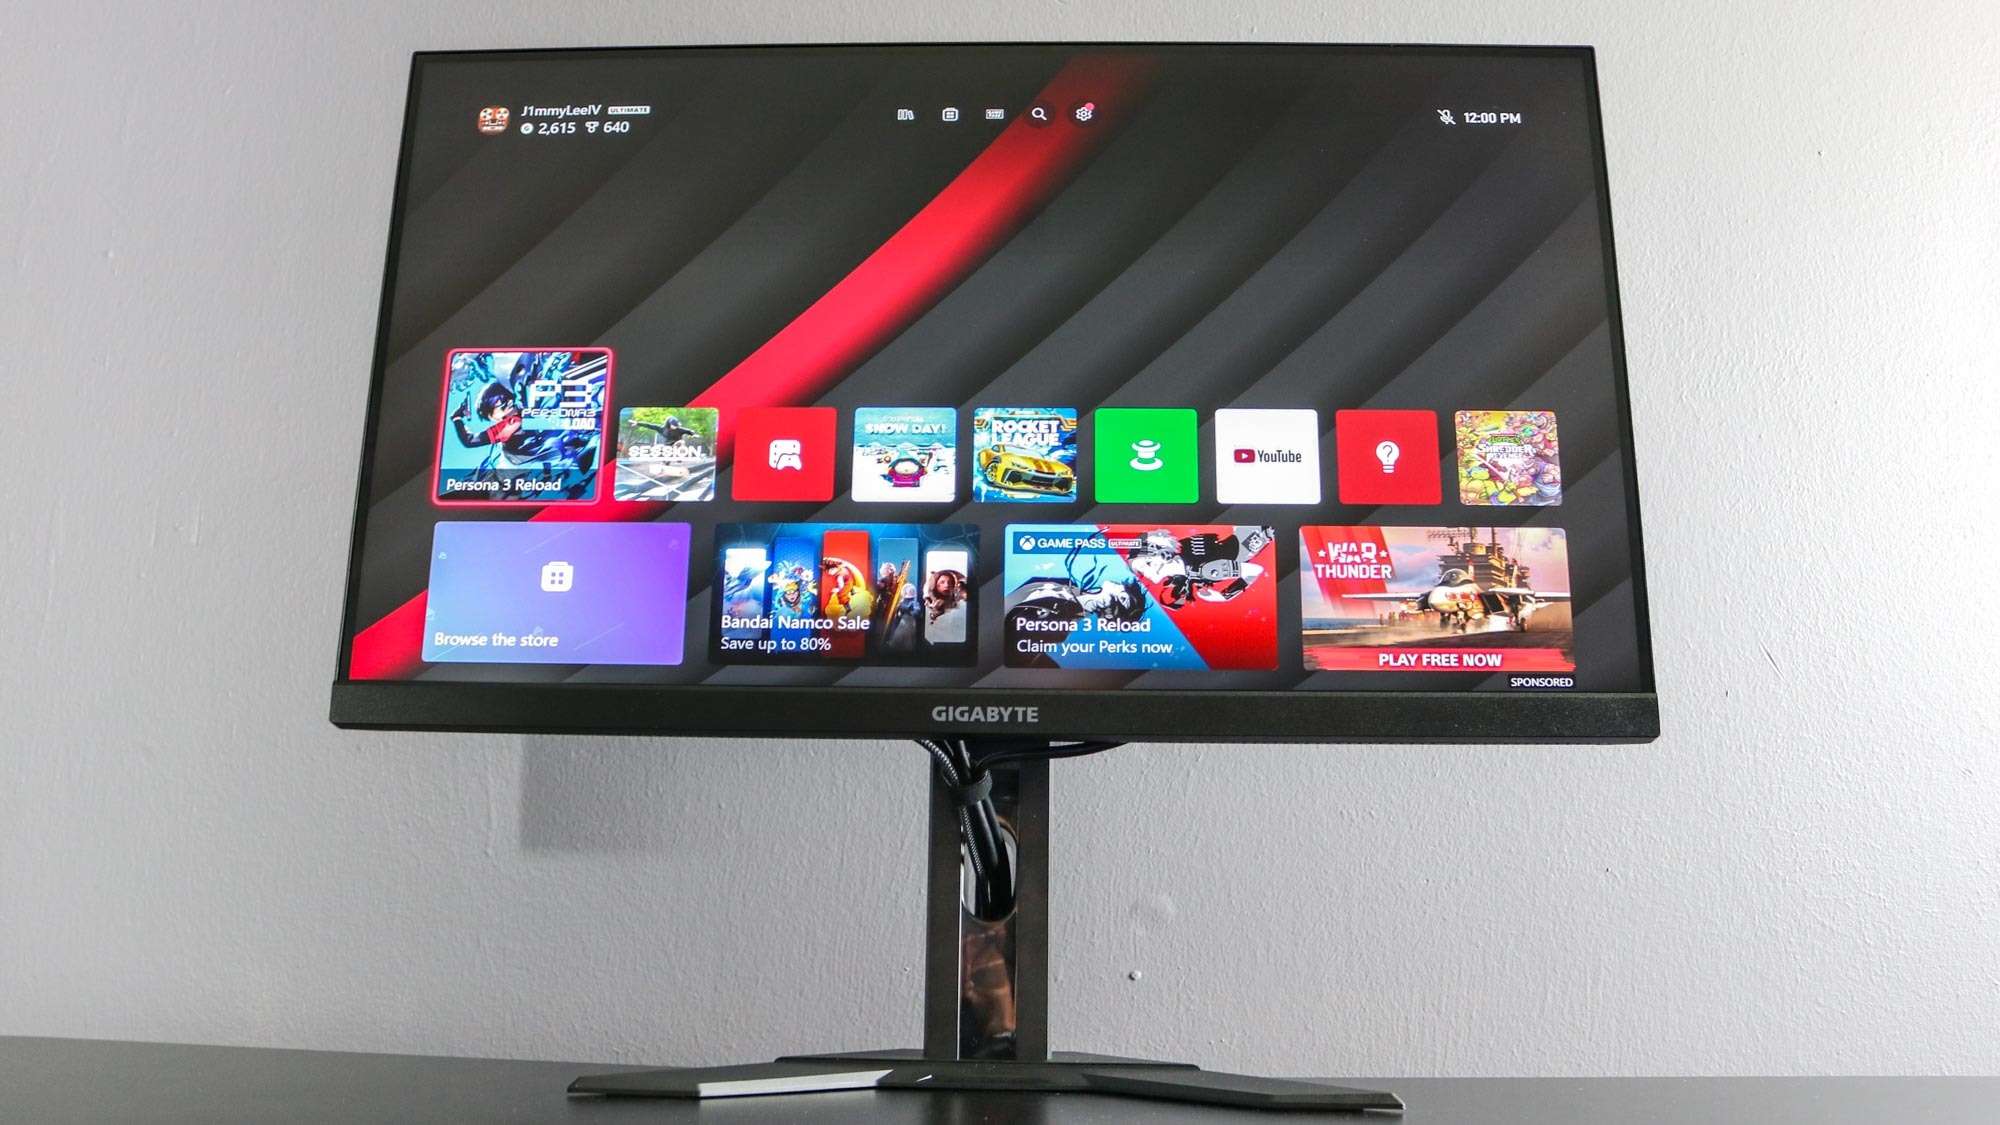 The Gigabyte M28U gaming monitor showing the Xbox Series homescreen